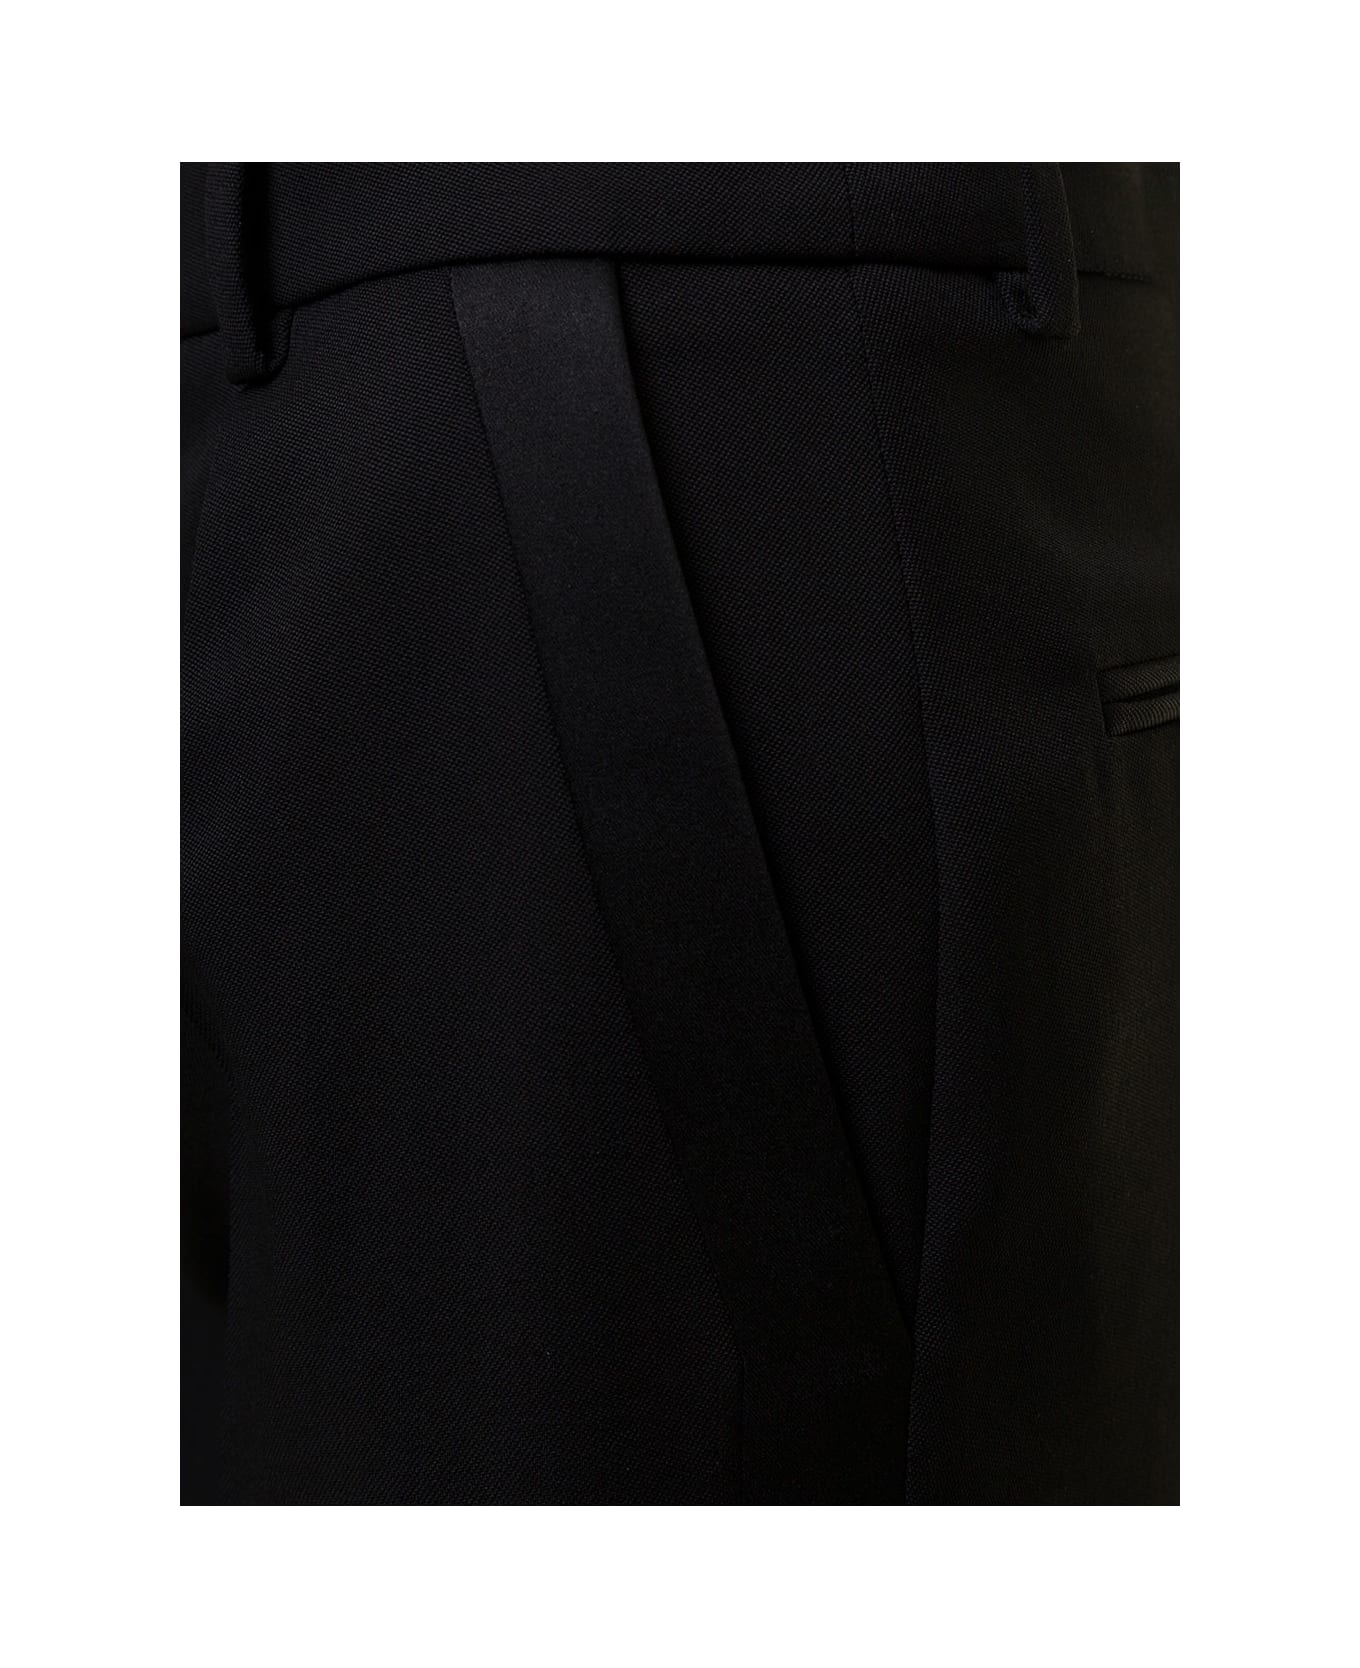 Saint Laurent Wool Pants - Black ボトムス